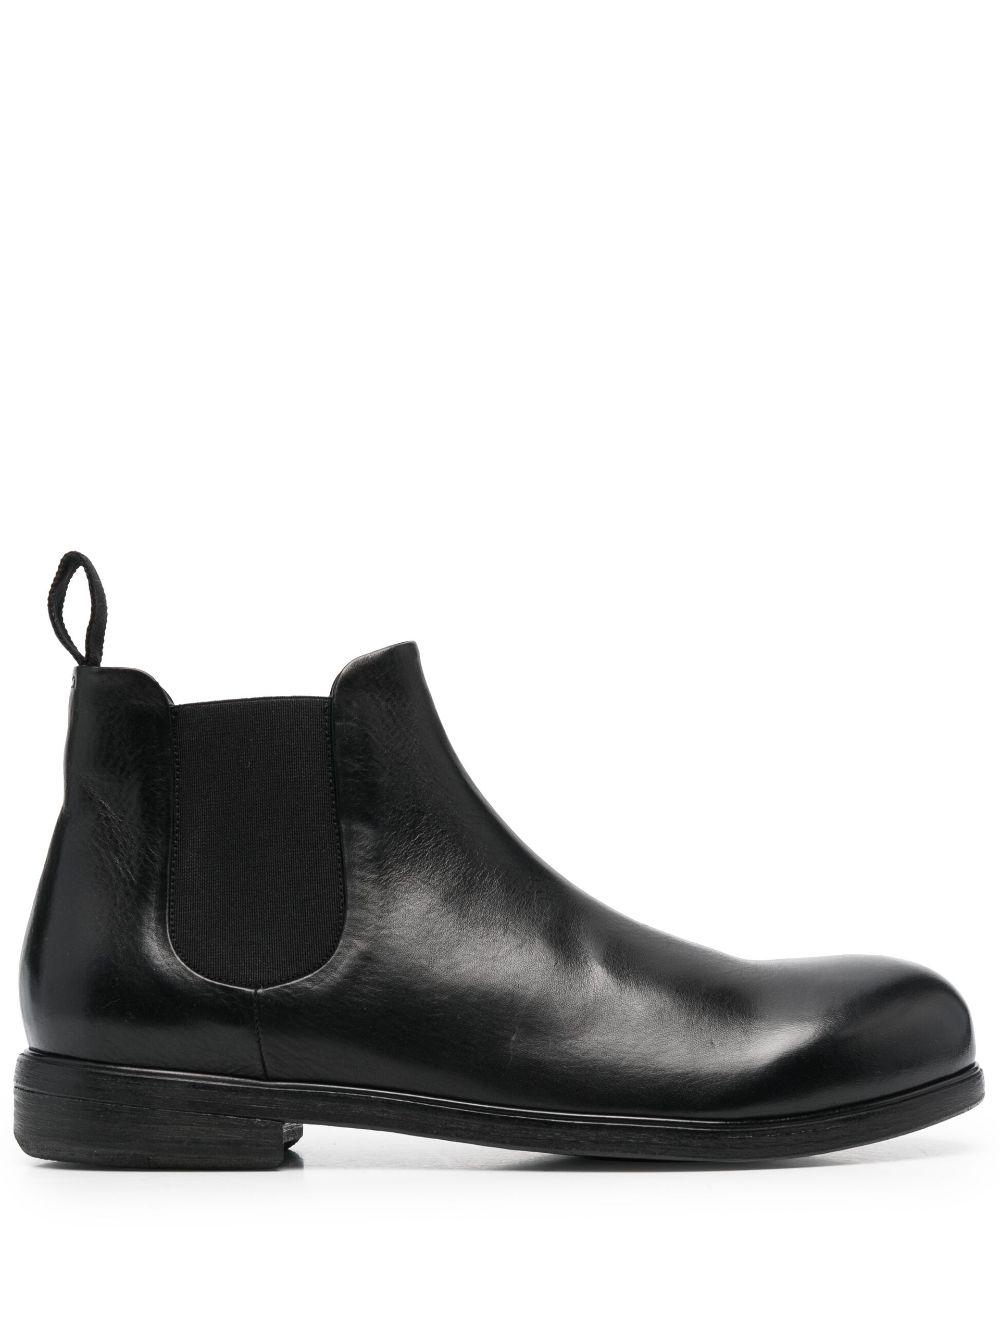 Marsèll Zucca leather boots - Black von Marsèll